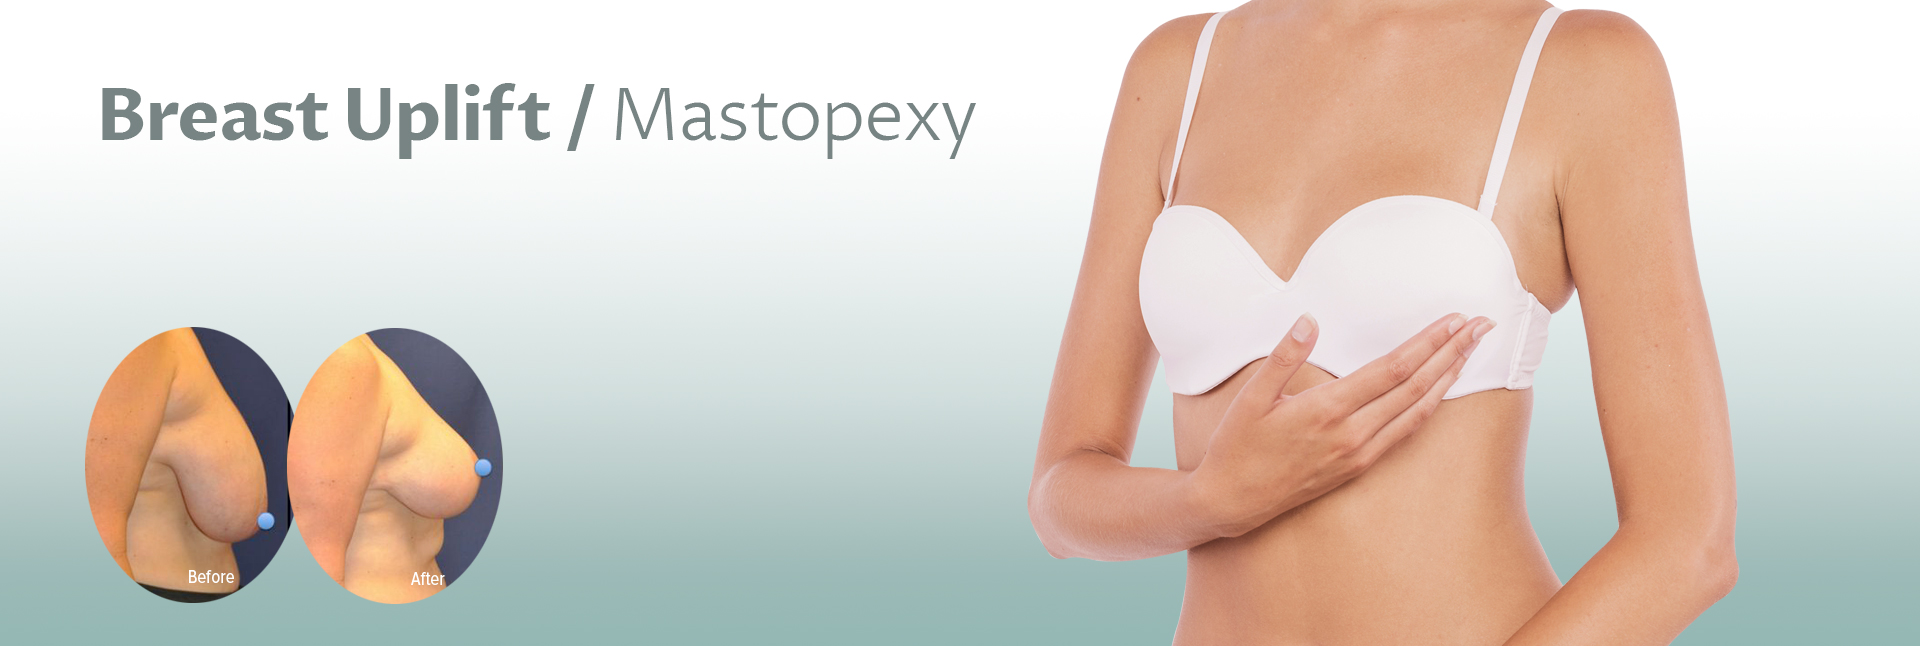 https://www.harleybodyclinic.co.uk/wp-content/uploads/2020/10/Breast-Uplift-Mastopexy.jpg